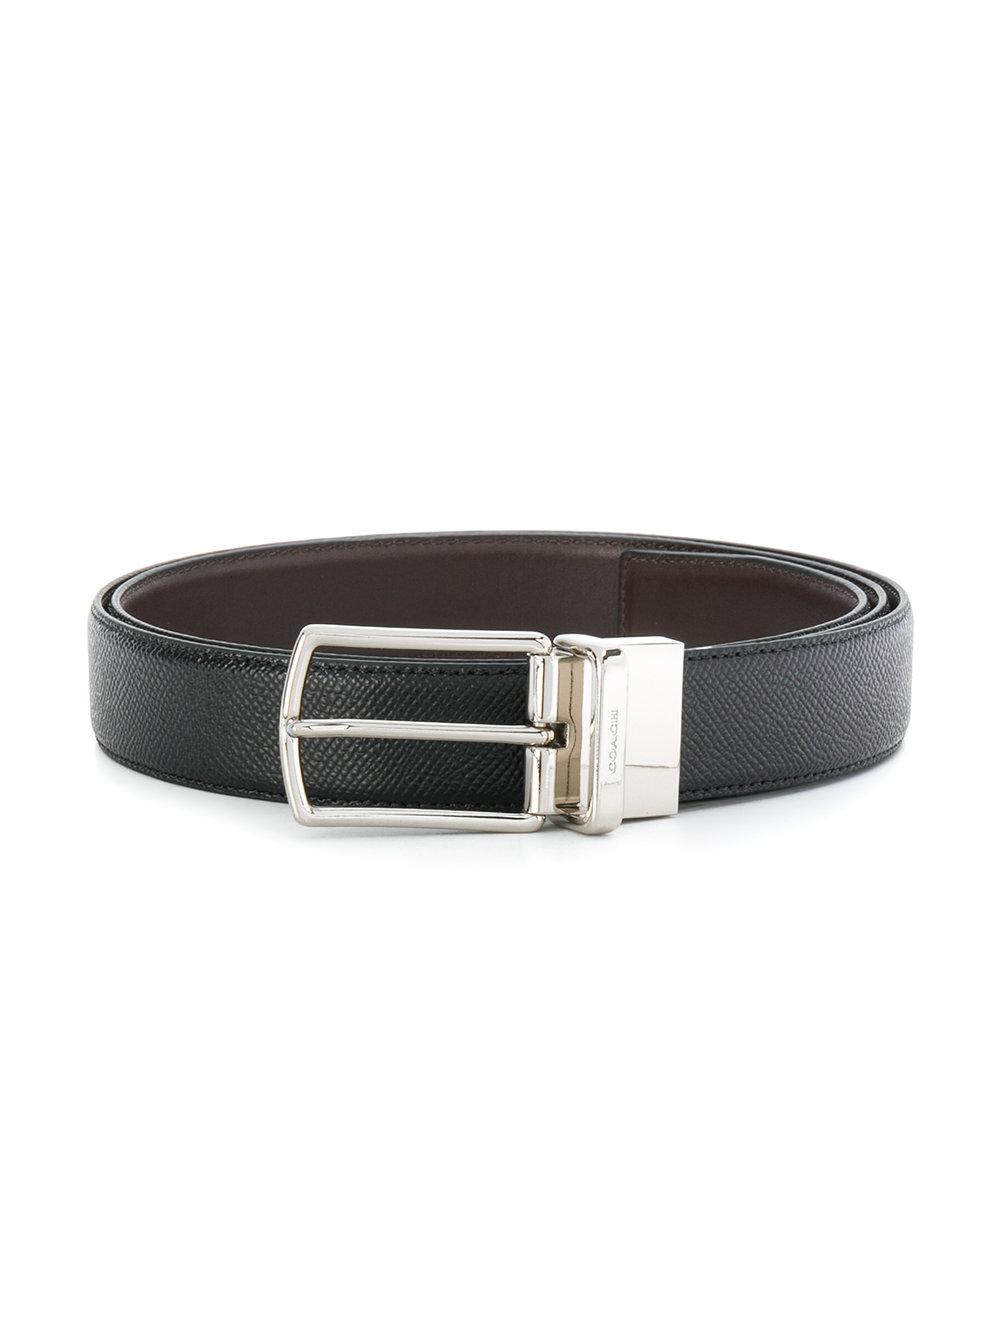 COACH Leather C Buckle Reversible Belt in Black for Men - Lyst